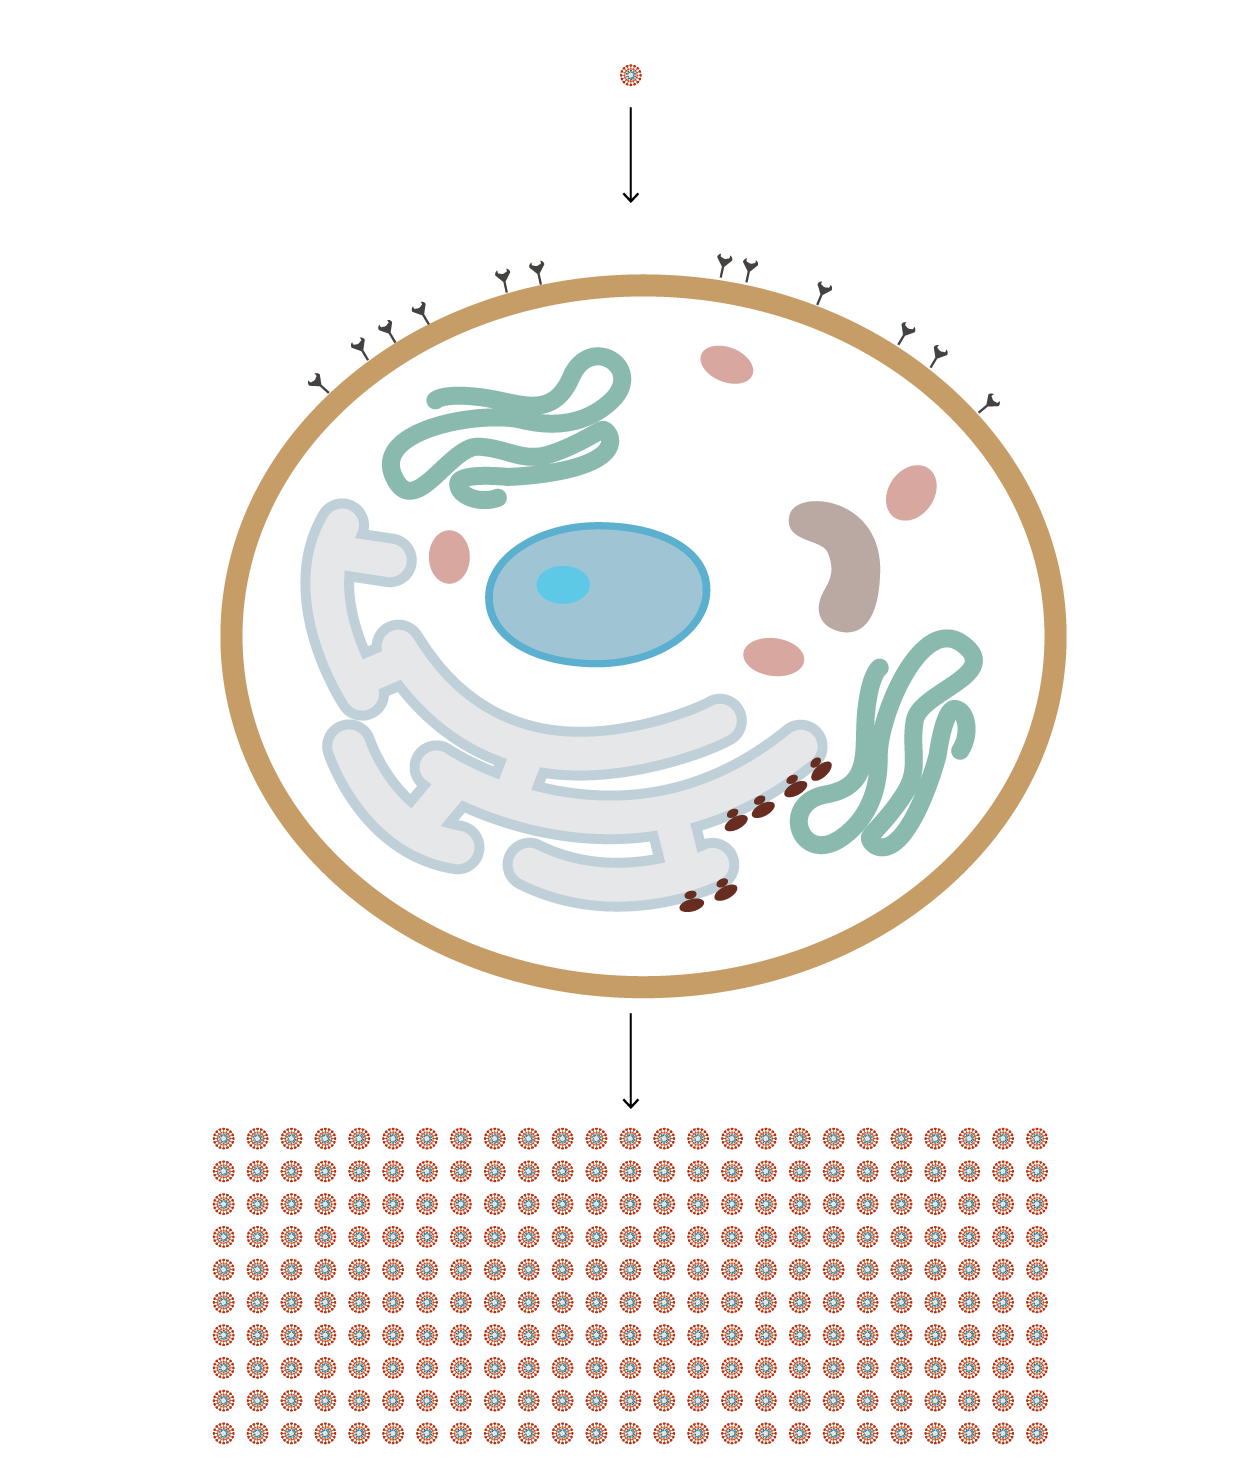 A diagram of the COVID-19 coronavirus